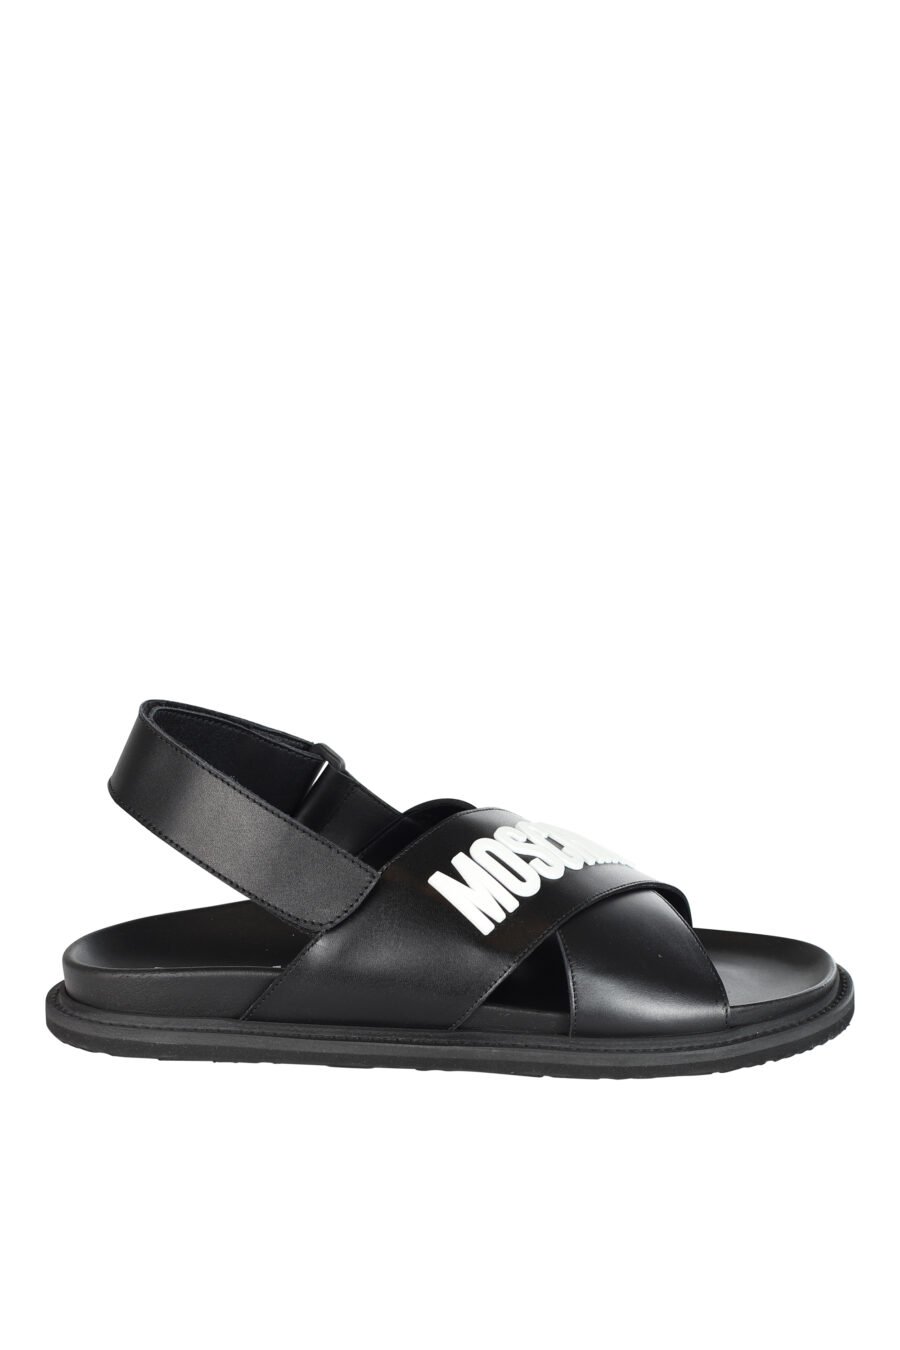 Black crossed sandals with white maxilogo - 8059022514769